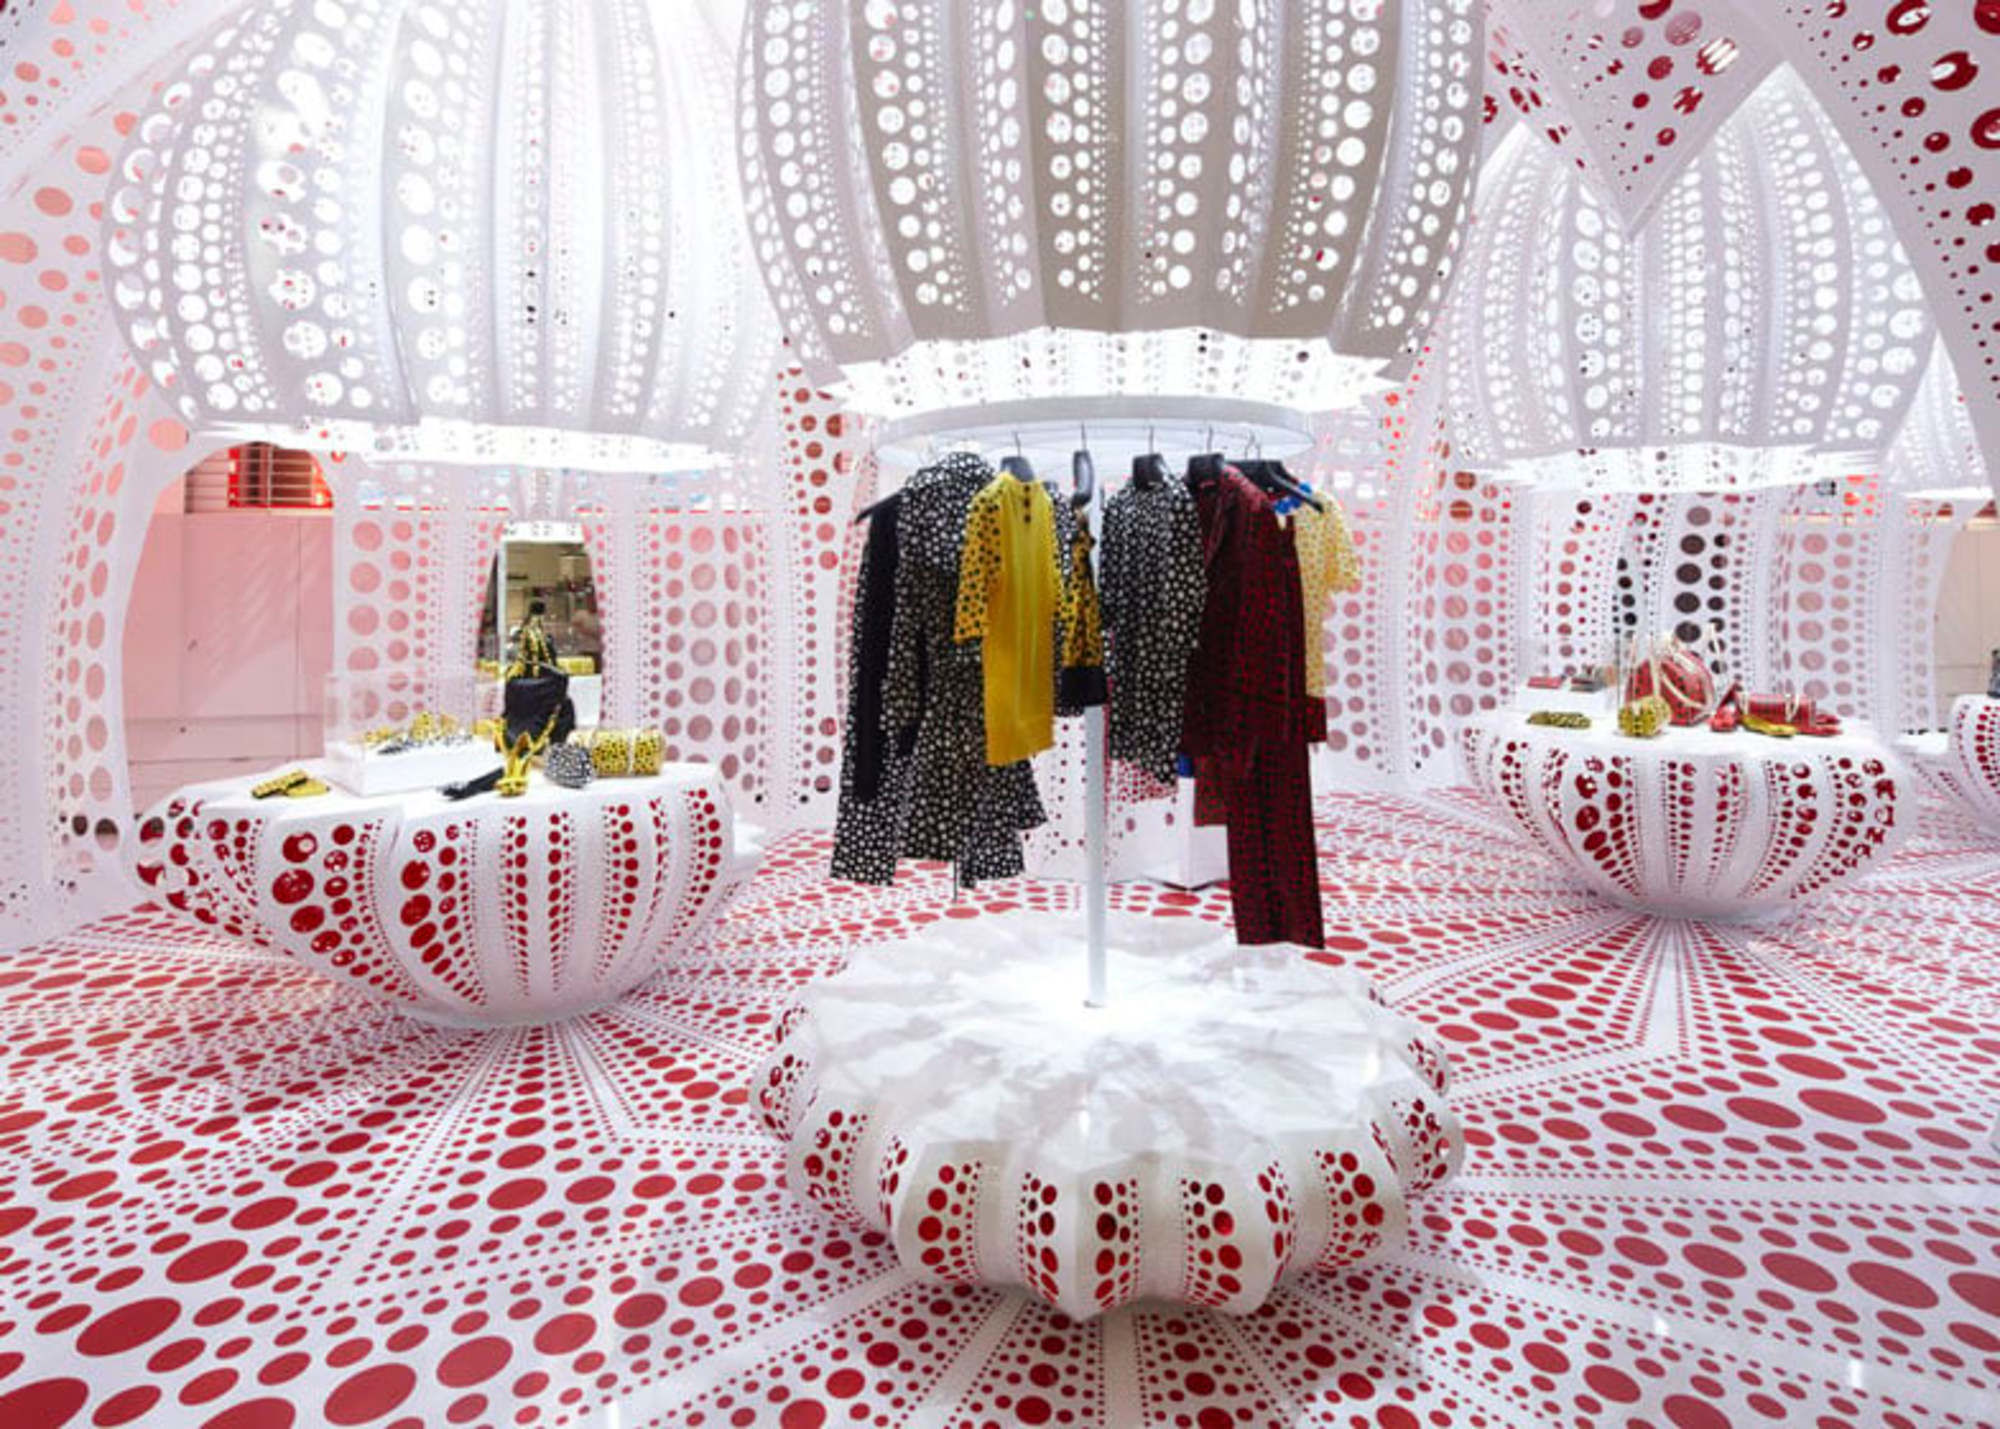 LOUIS VUITTON Art, Fashion and Architecture by Takashi Murakami -  Collecting Louis Vuitton 